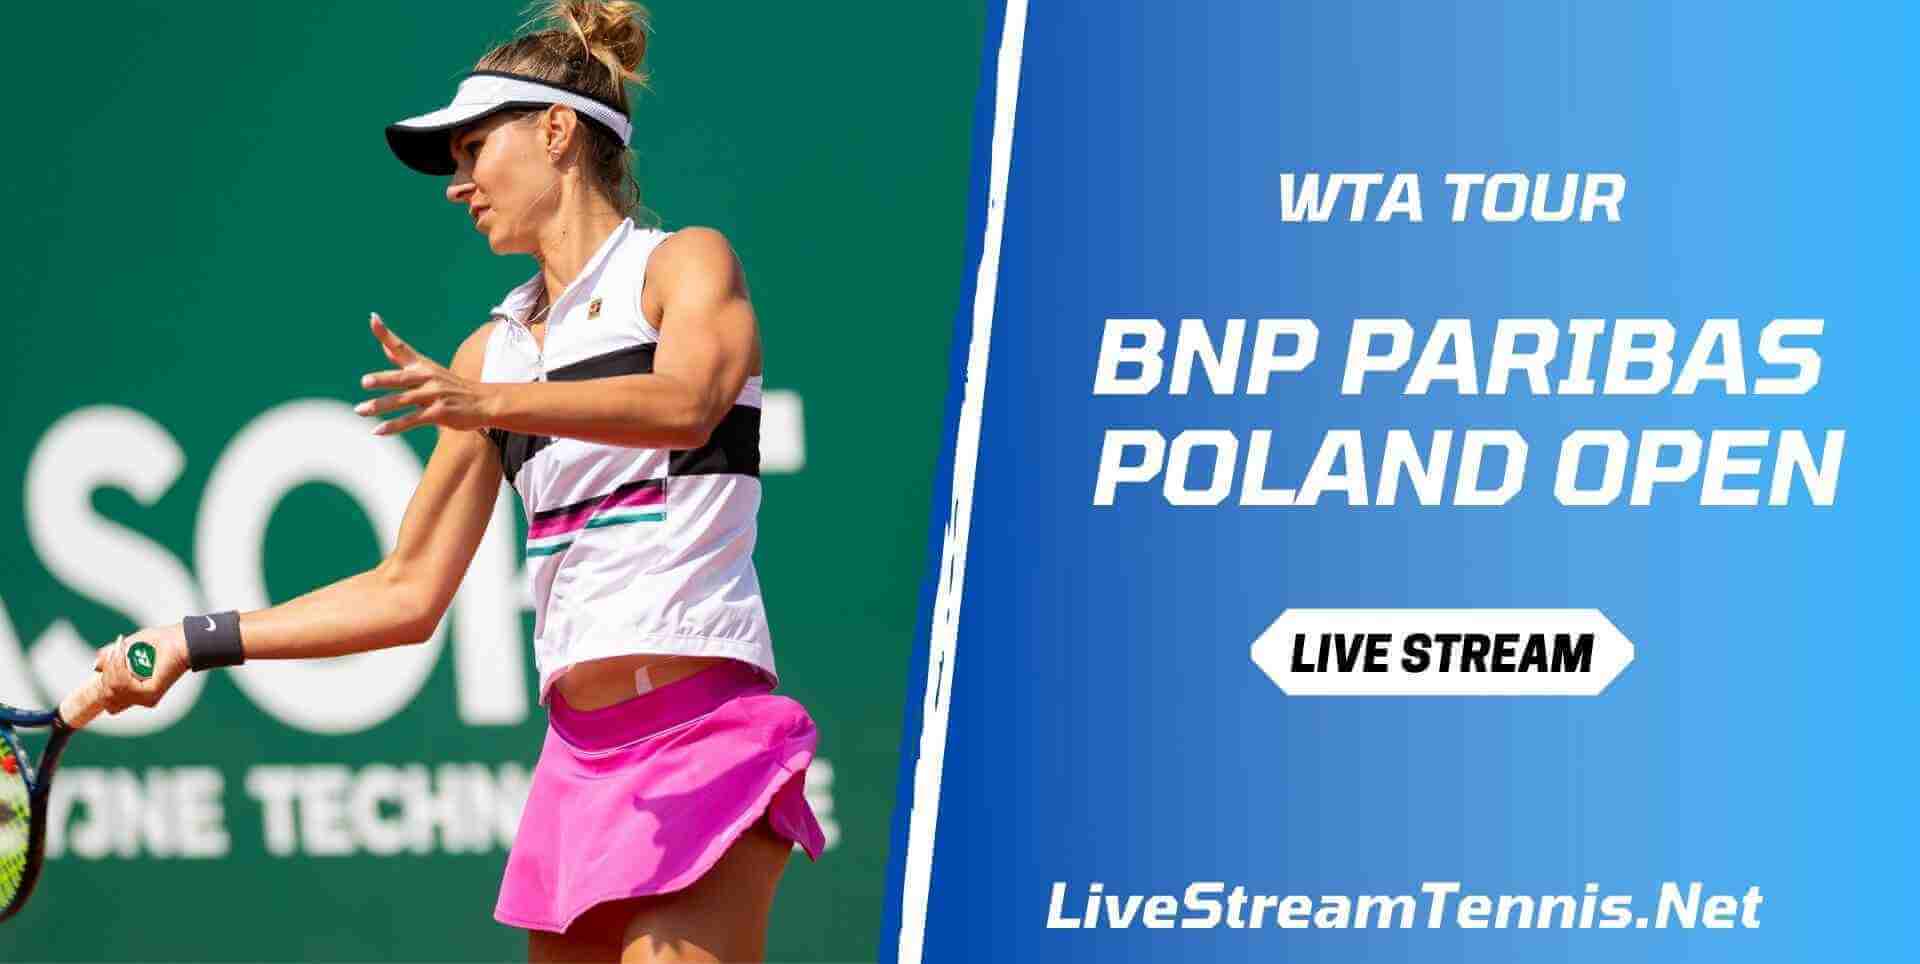 BNP Paribas Poland Open WTA Live Stream